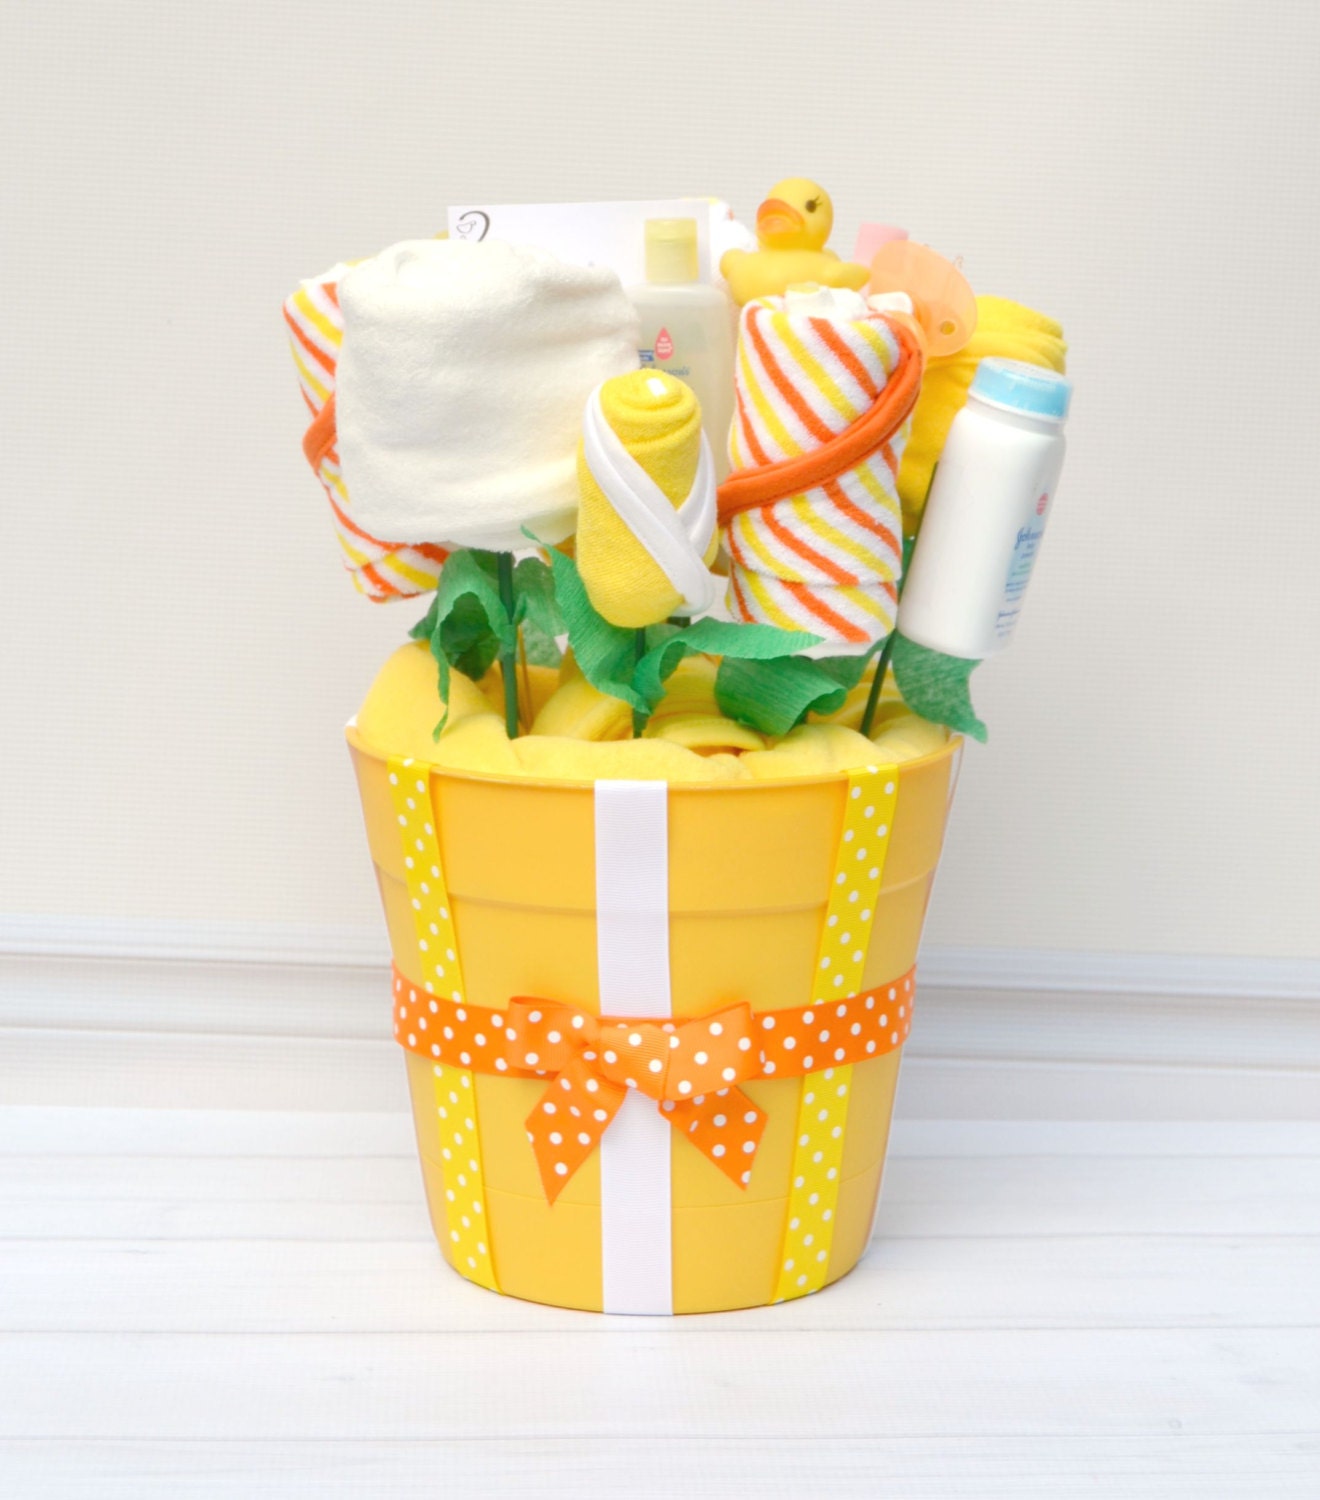 Unisex baby gift basket